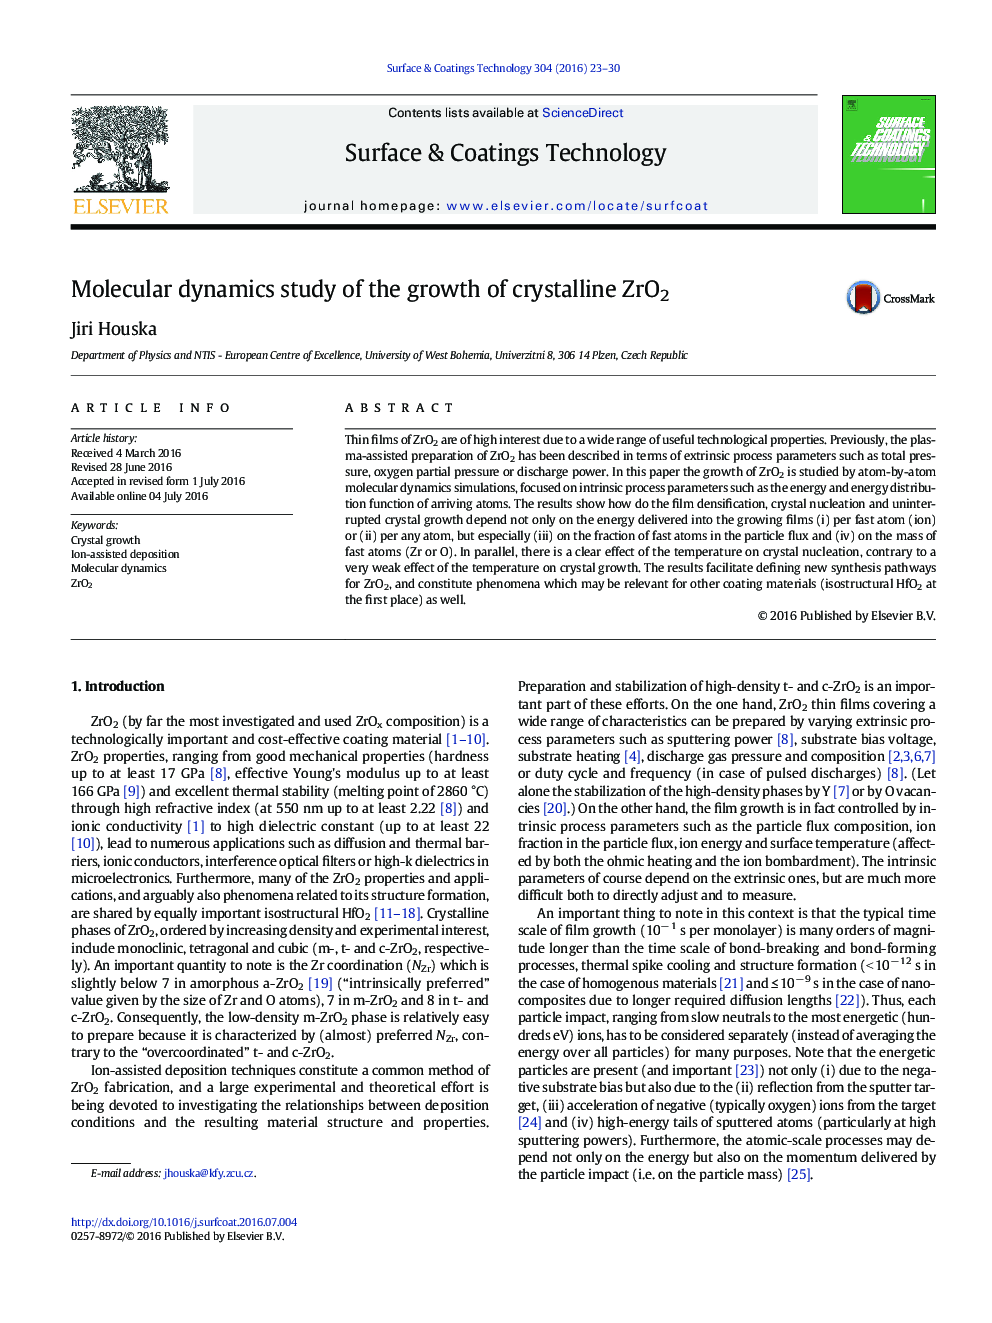 Molecular dynamics study of the growth of crystalline ZrO2